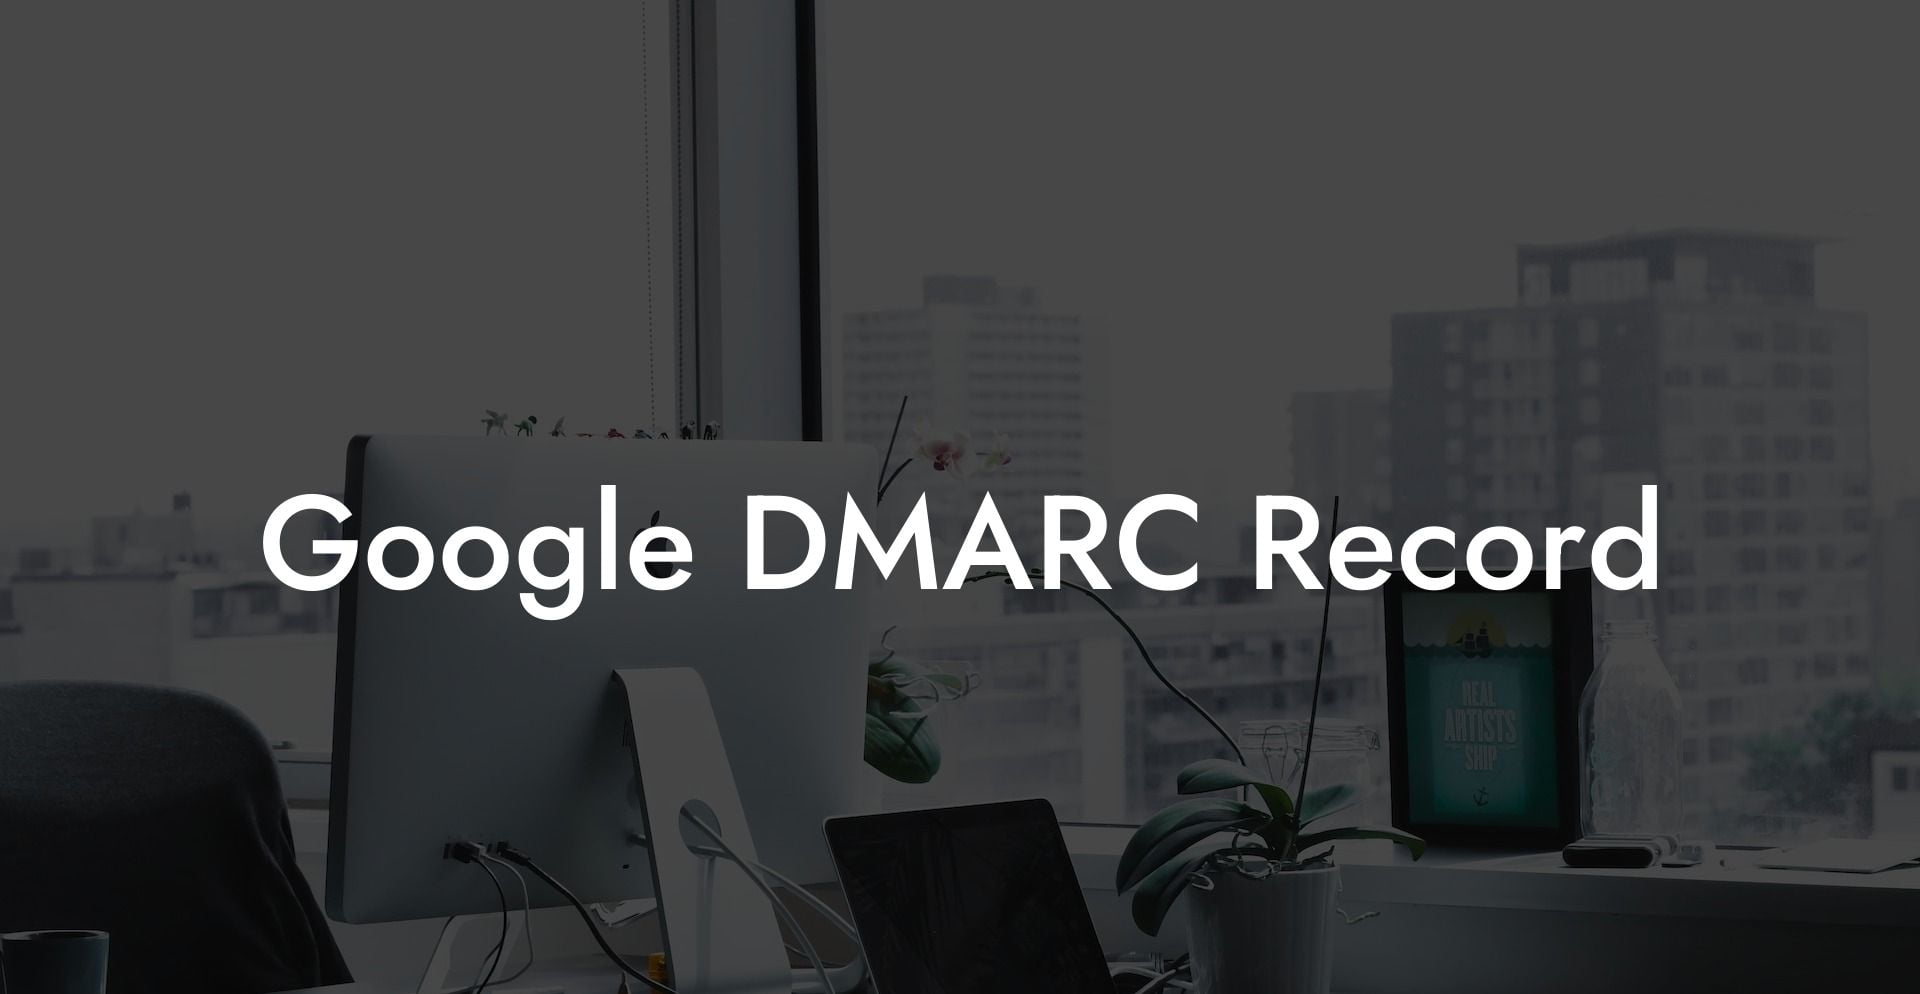 Google DMARC Record